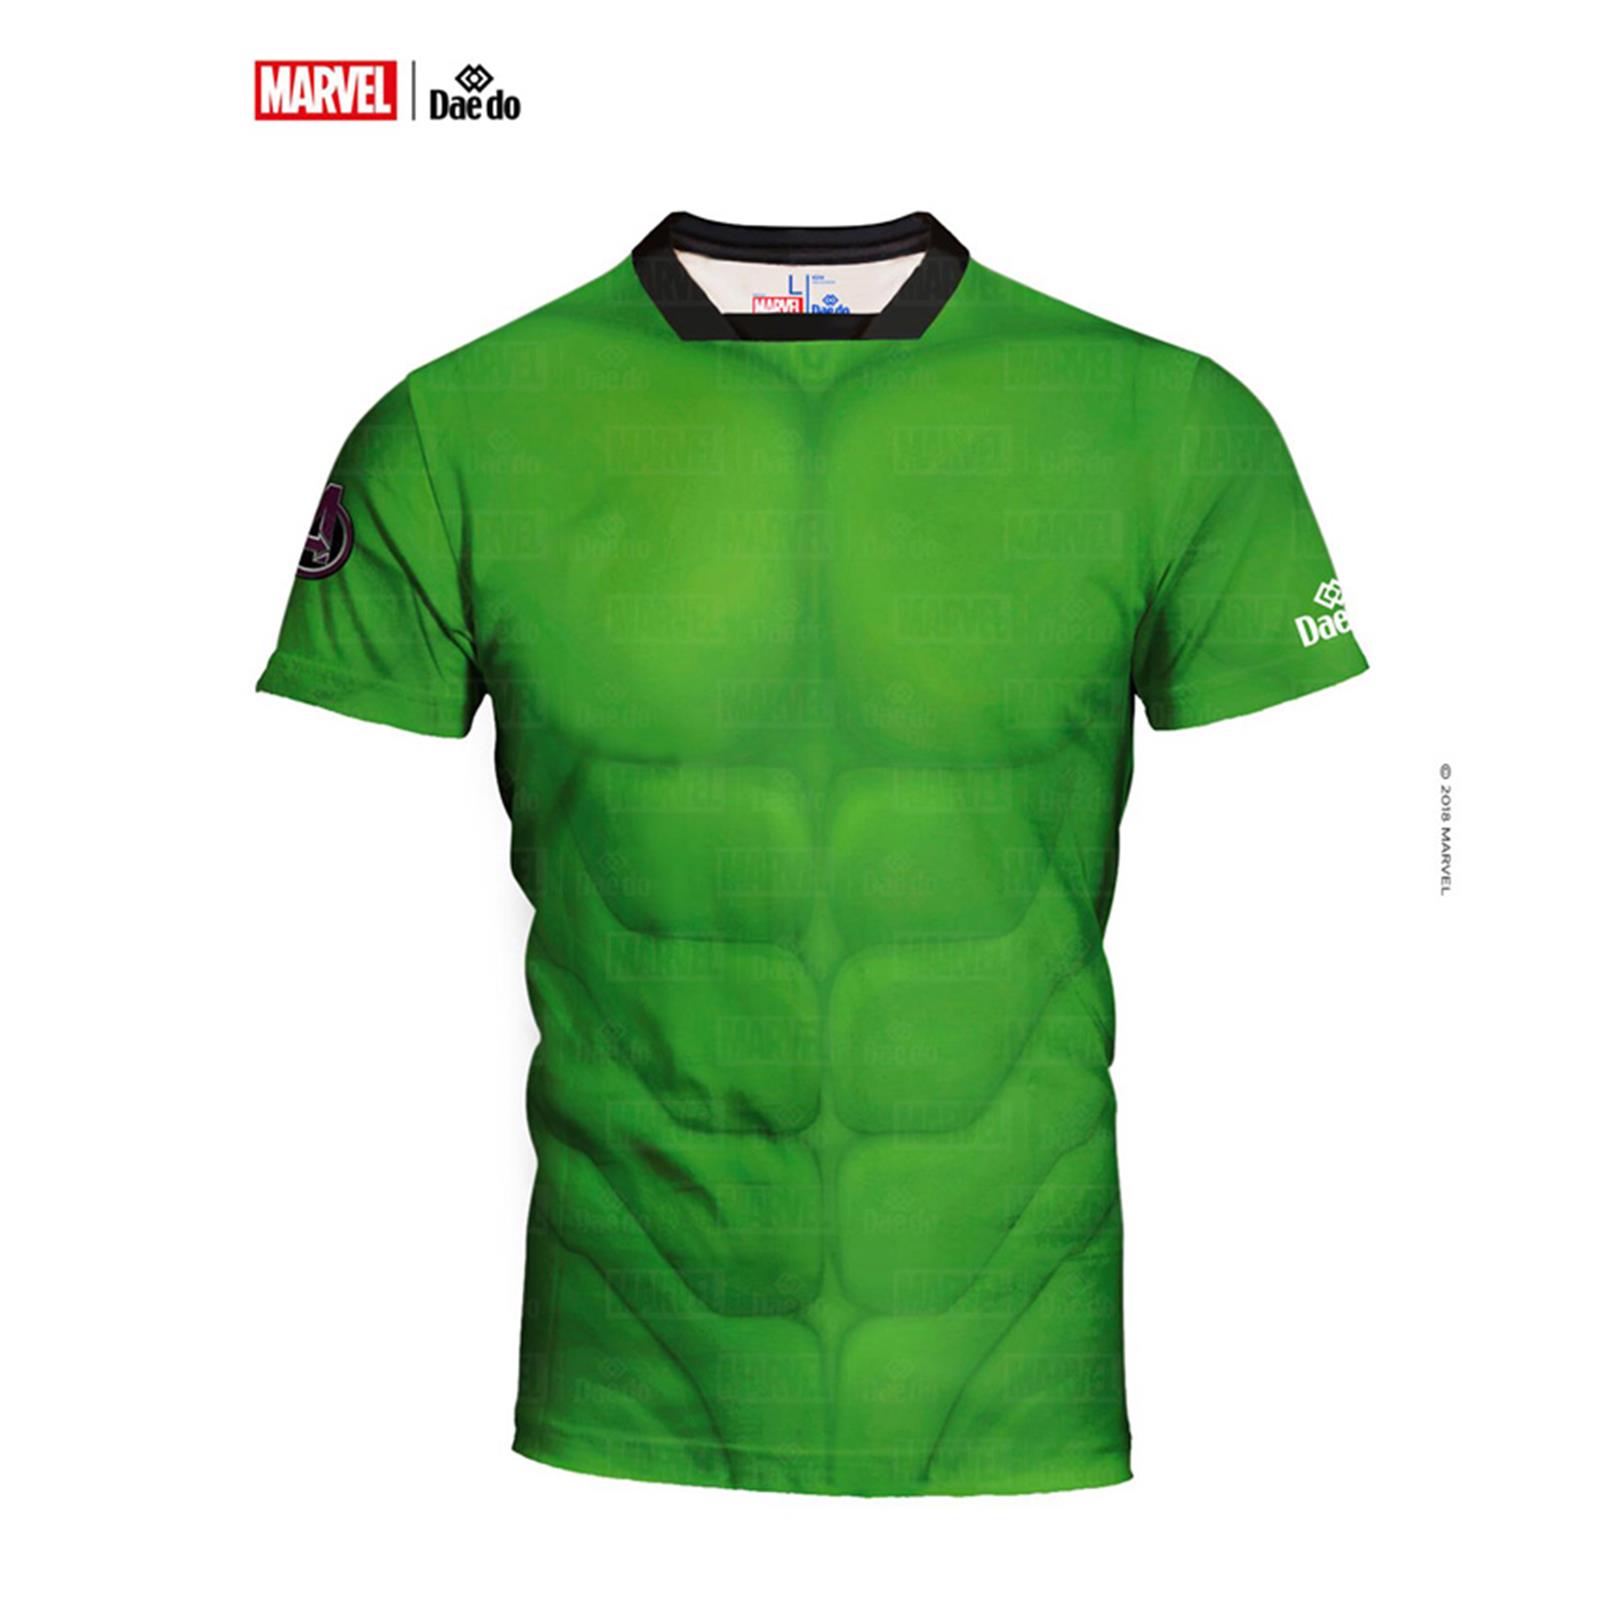 Dae Do Maglietta Hulk Full Print Slim Fit (12 - VERDE)